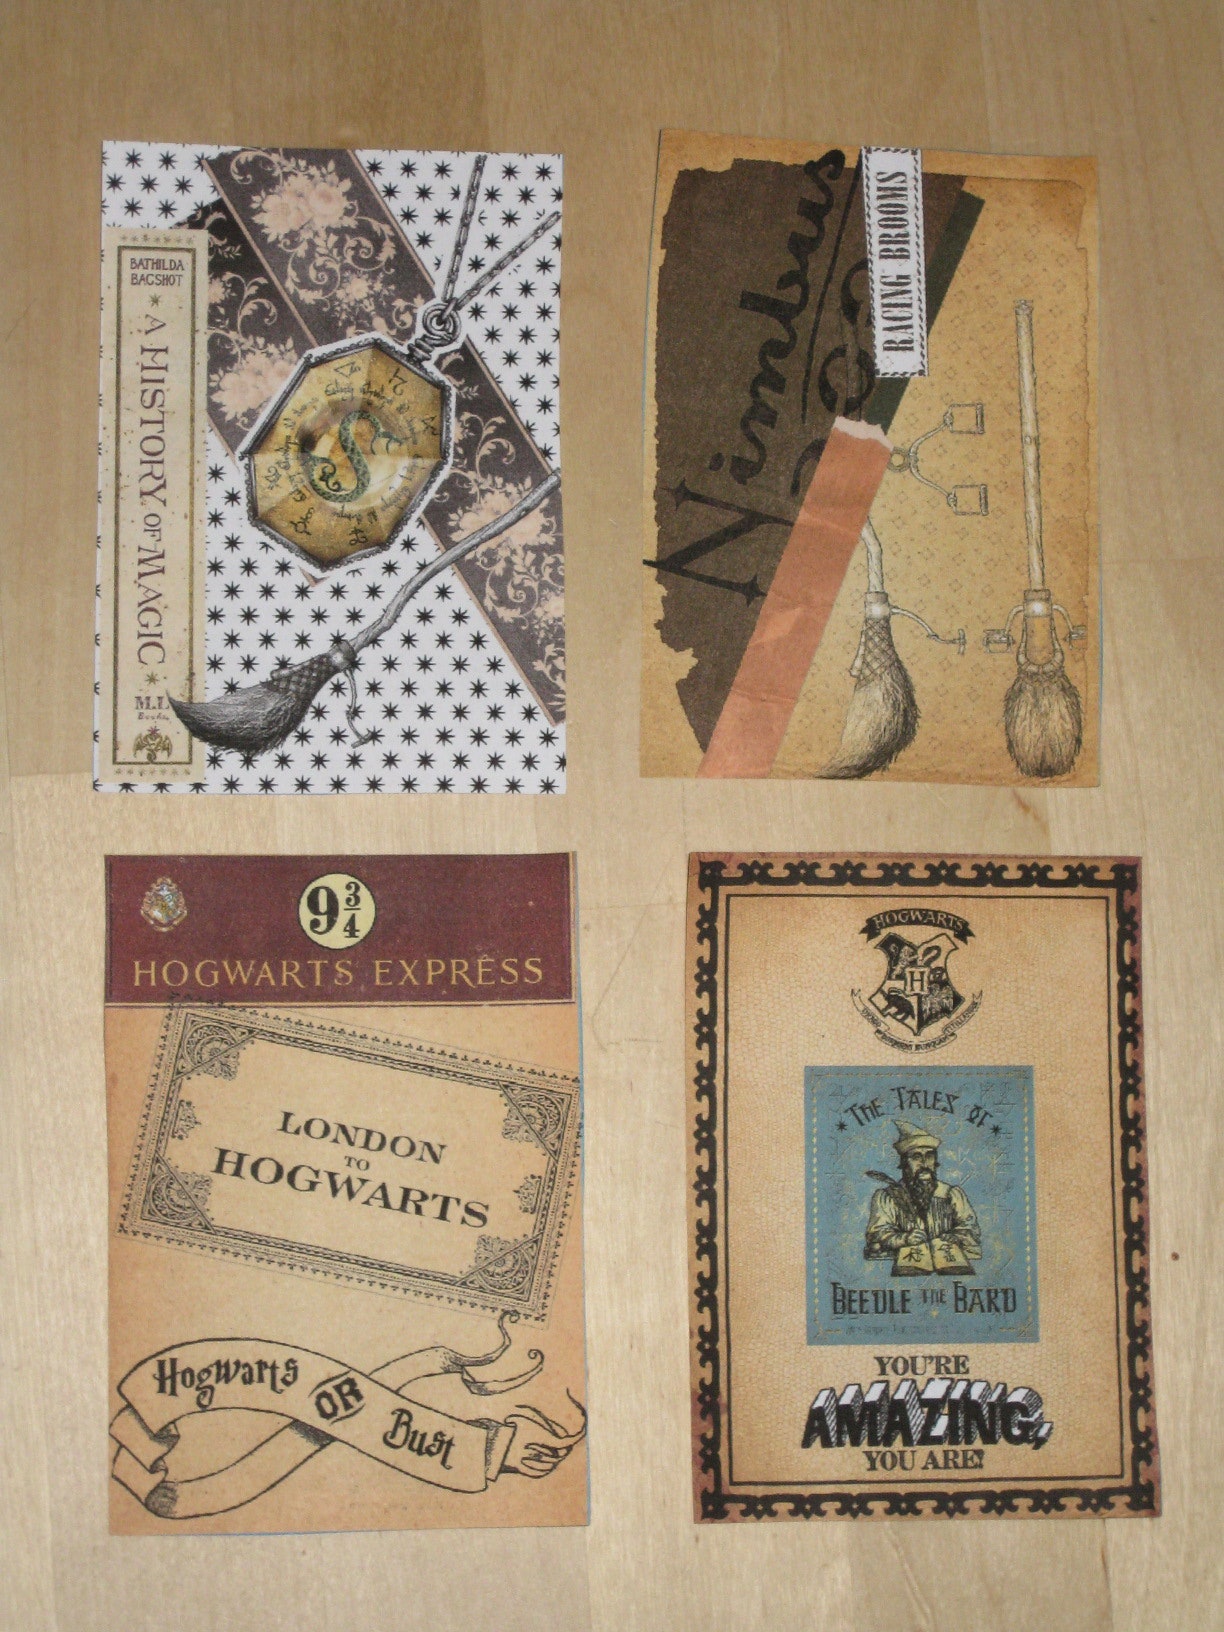 Free Printable Harry Potter Envelope Printable Wallpapers